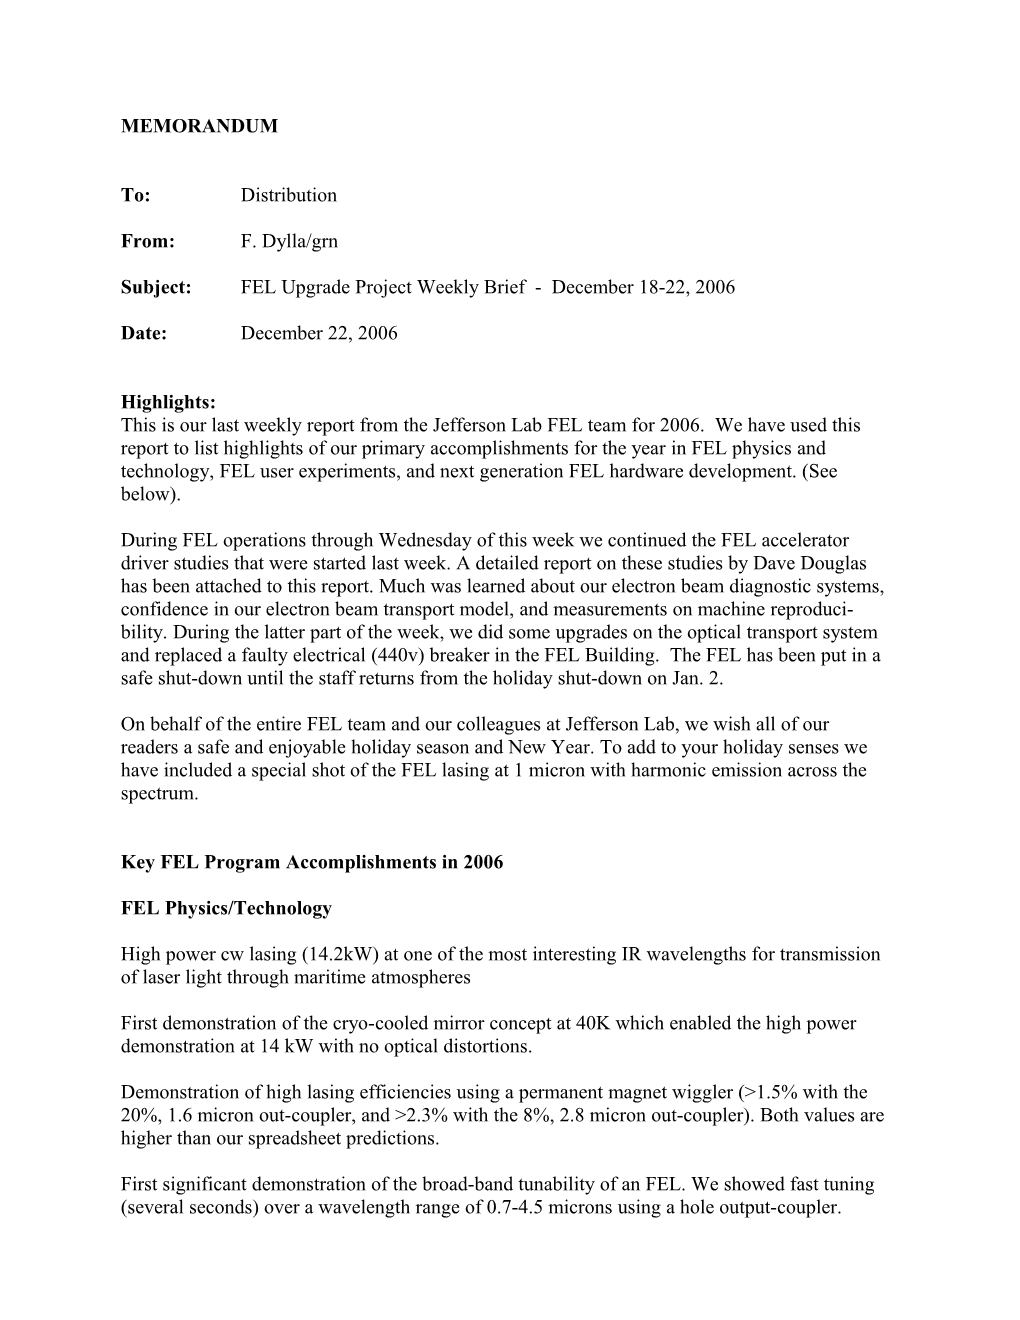 Subject: FEL Upgrade Project Weekly Brief - December 18-22, 2006